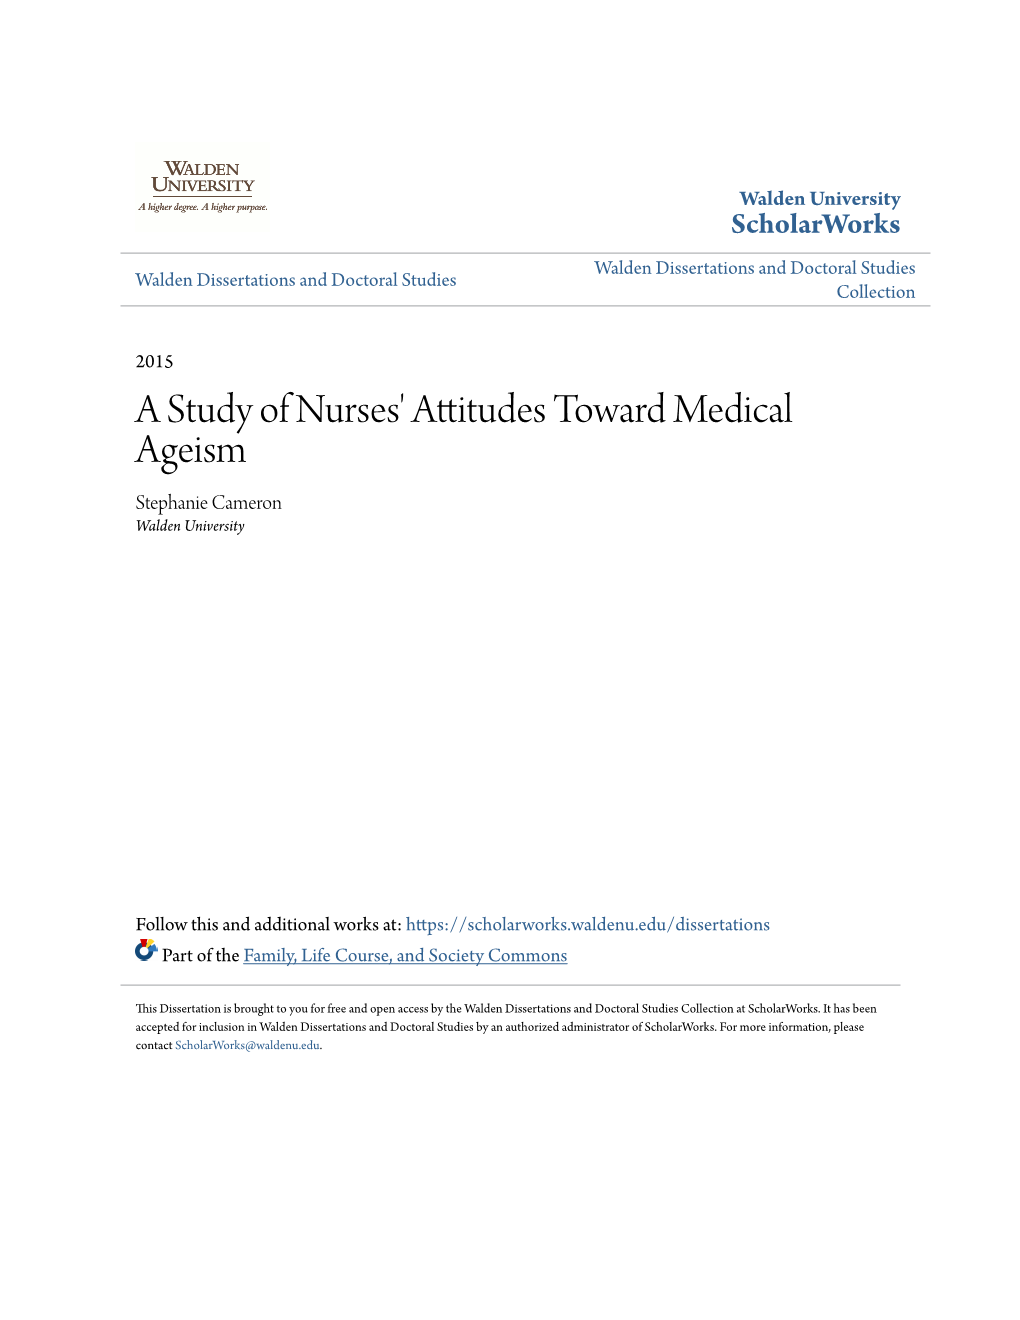 A Study of Nurses' Attitudes Toward Medical Ageism Stephanie Cameron Walden University